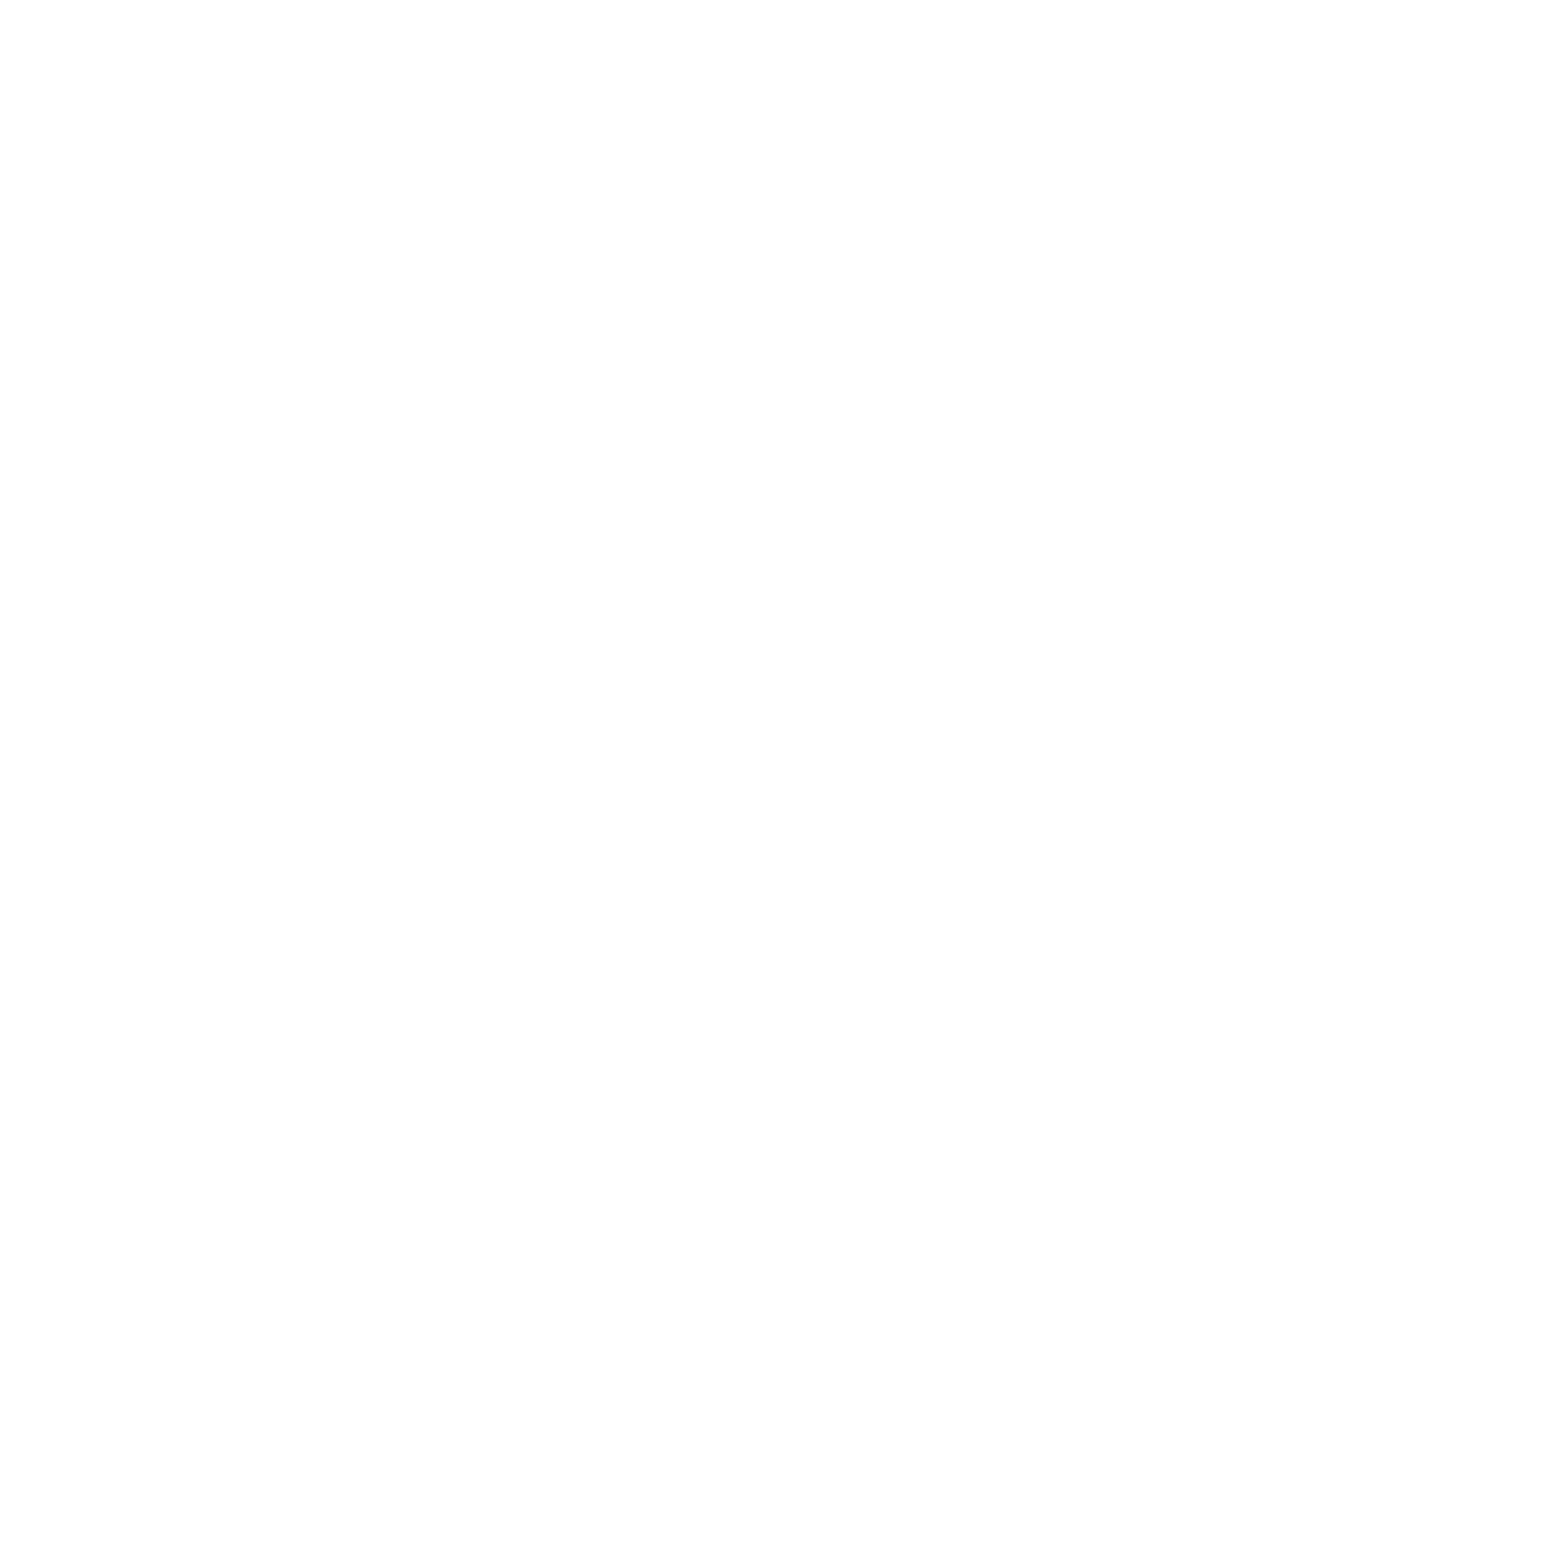 NOS logo pour fonds sombres (PNG transparent)